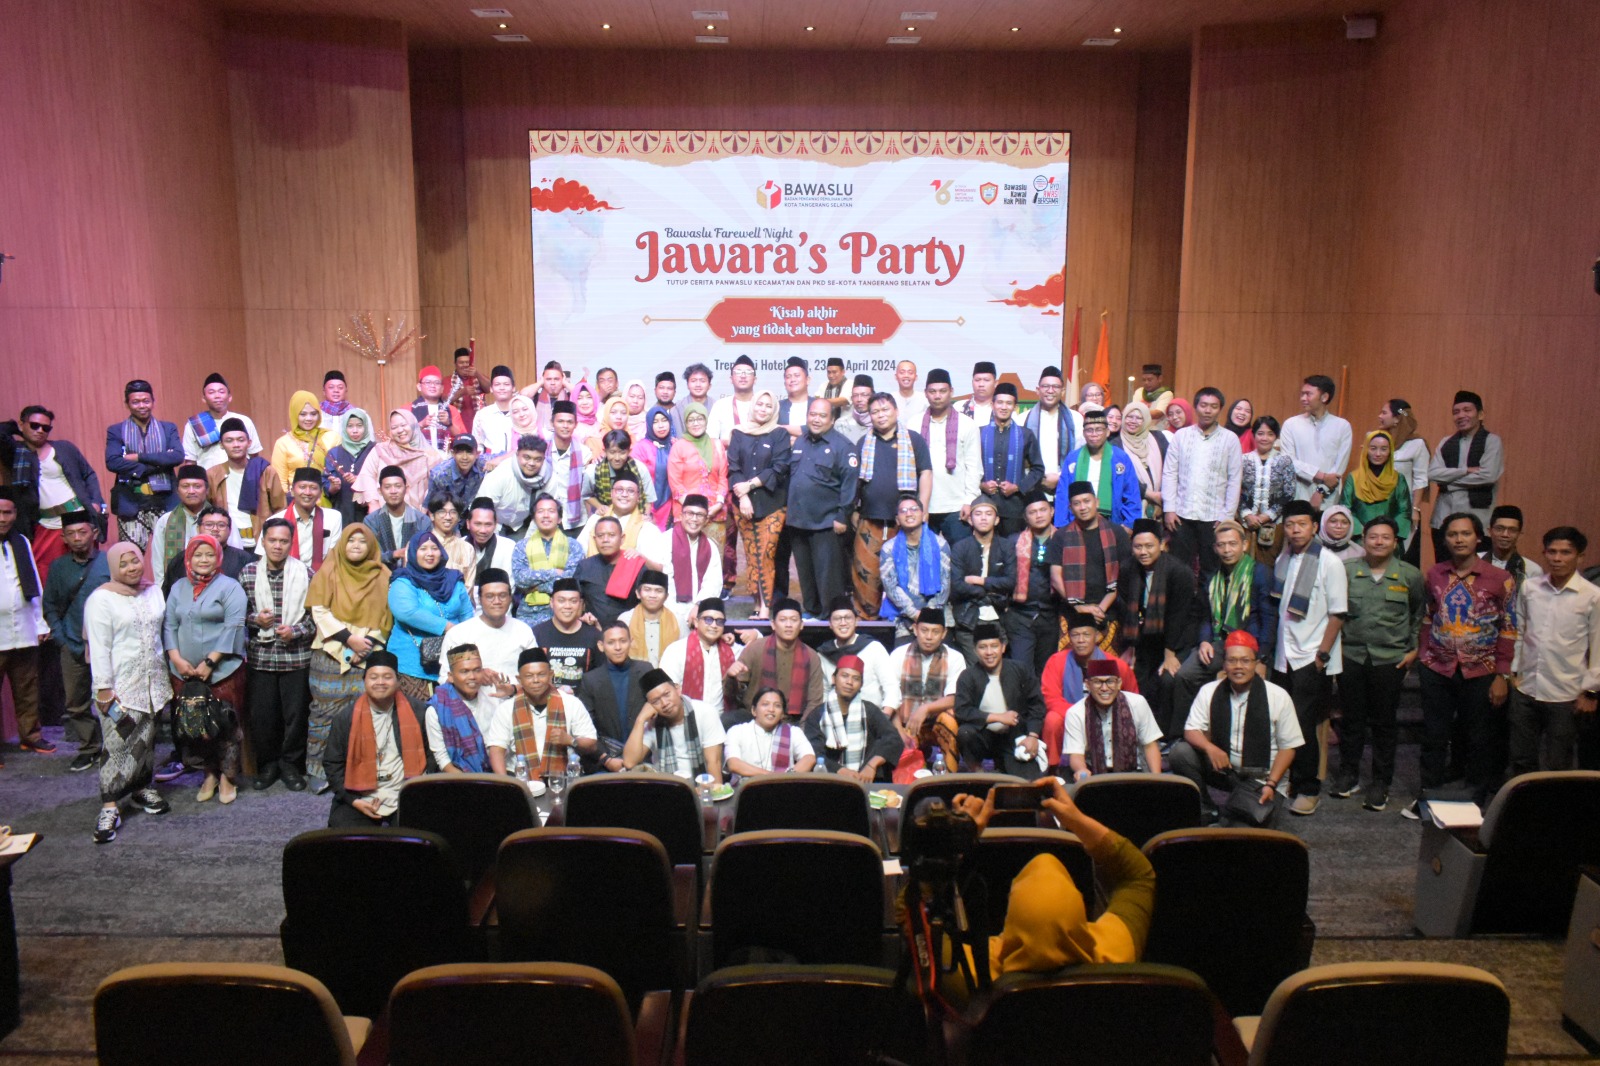 Bawaslu gelar Jawara's Party sambil evaluasi kinerja.(irm)